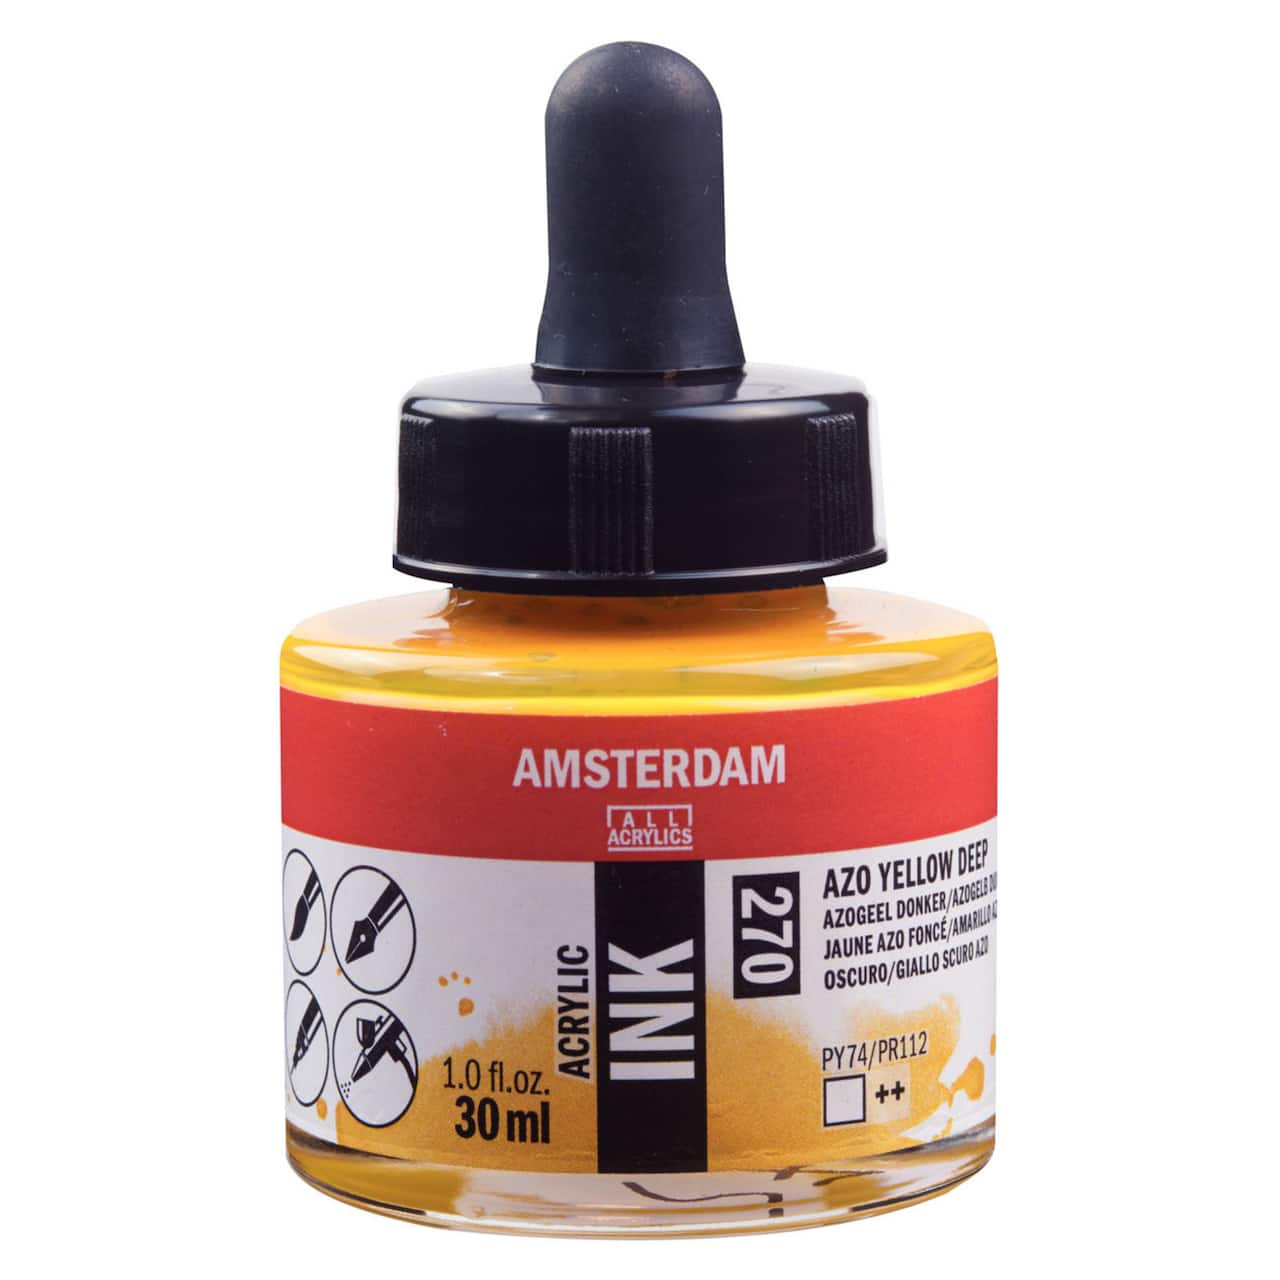 Amsterdam Acrylic Ink, 1oz.